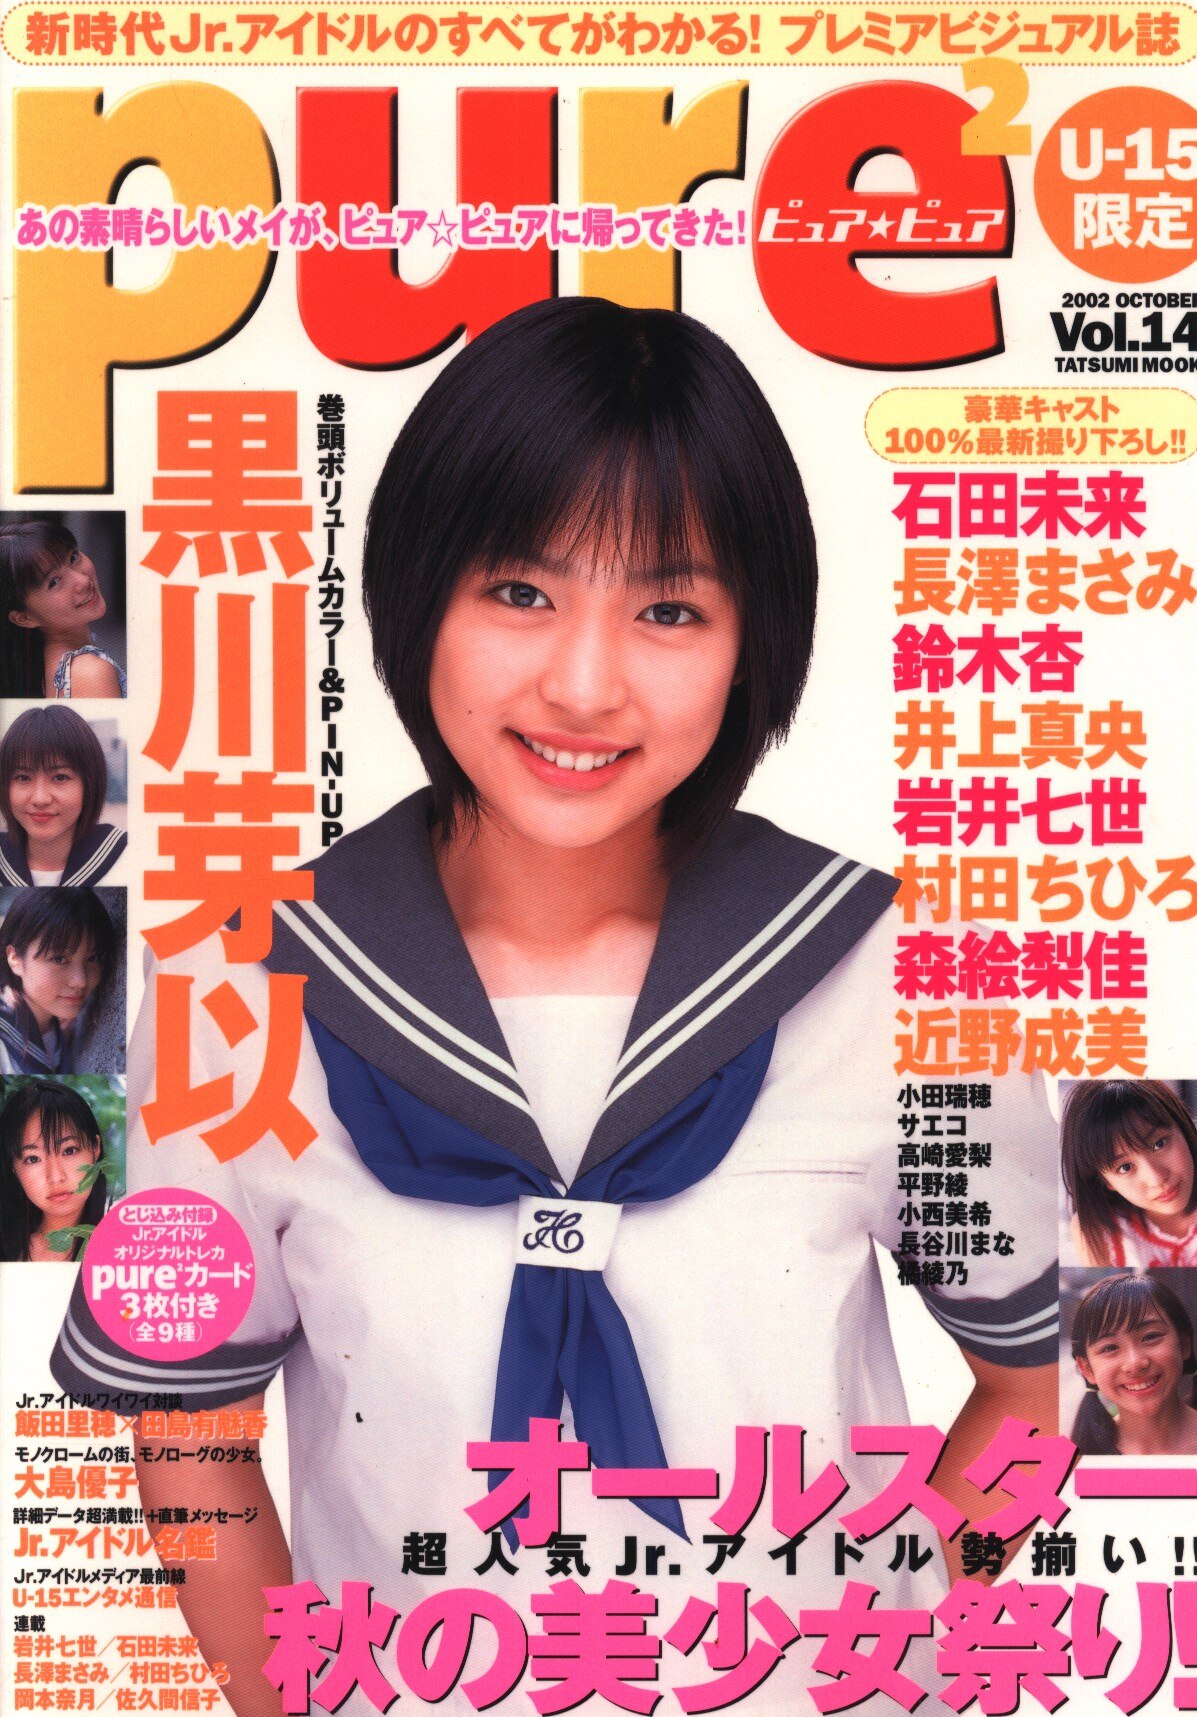 Tatsumi Mook Pure2 Pure Pure October 02 Edition 14 Mandarake Online Shop